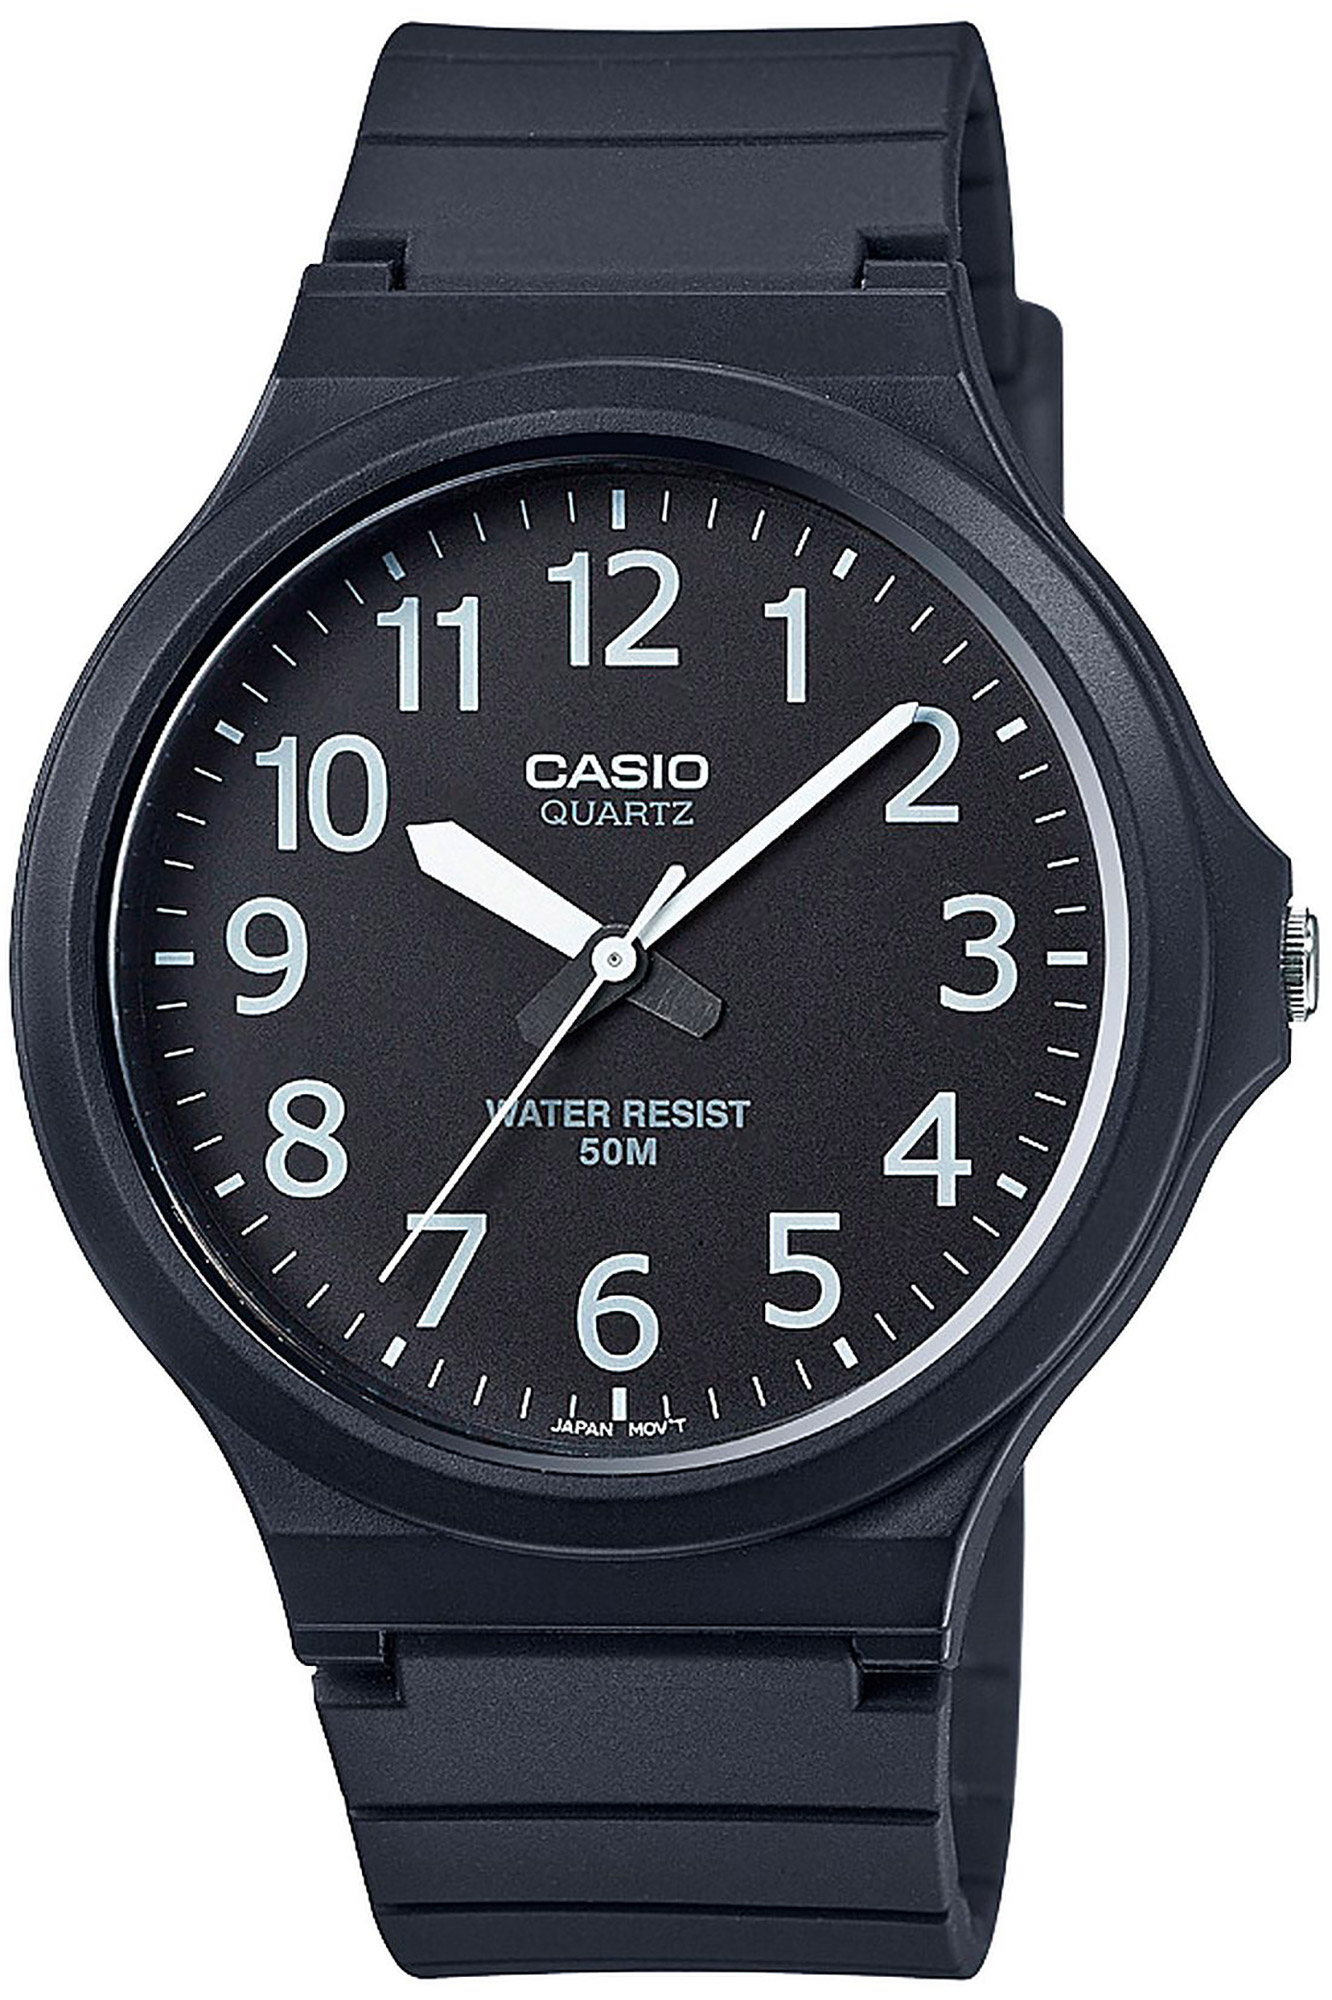 Watch CASIO Collection mw-240-1b